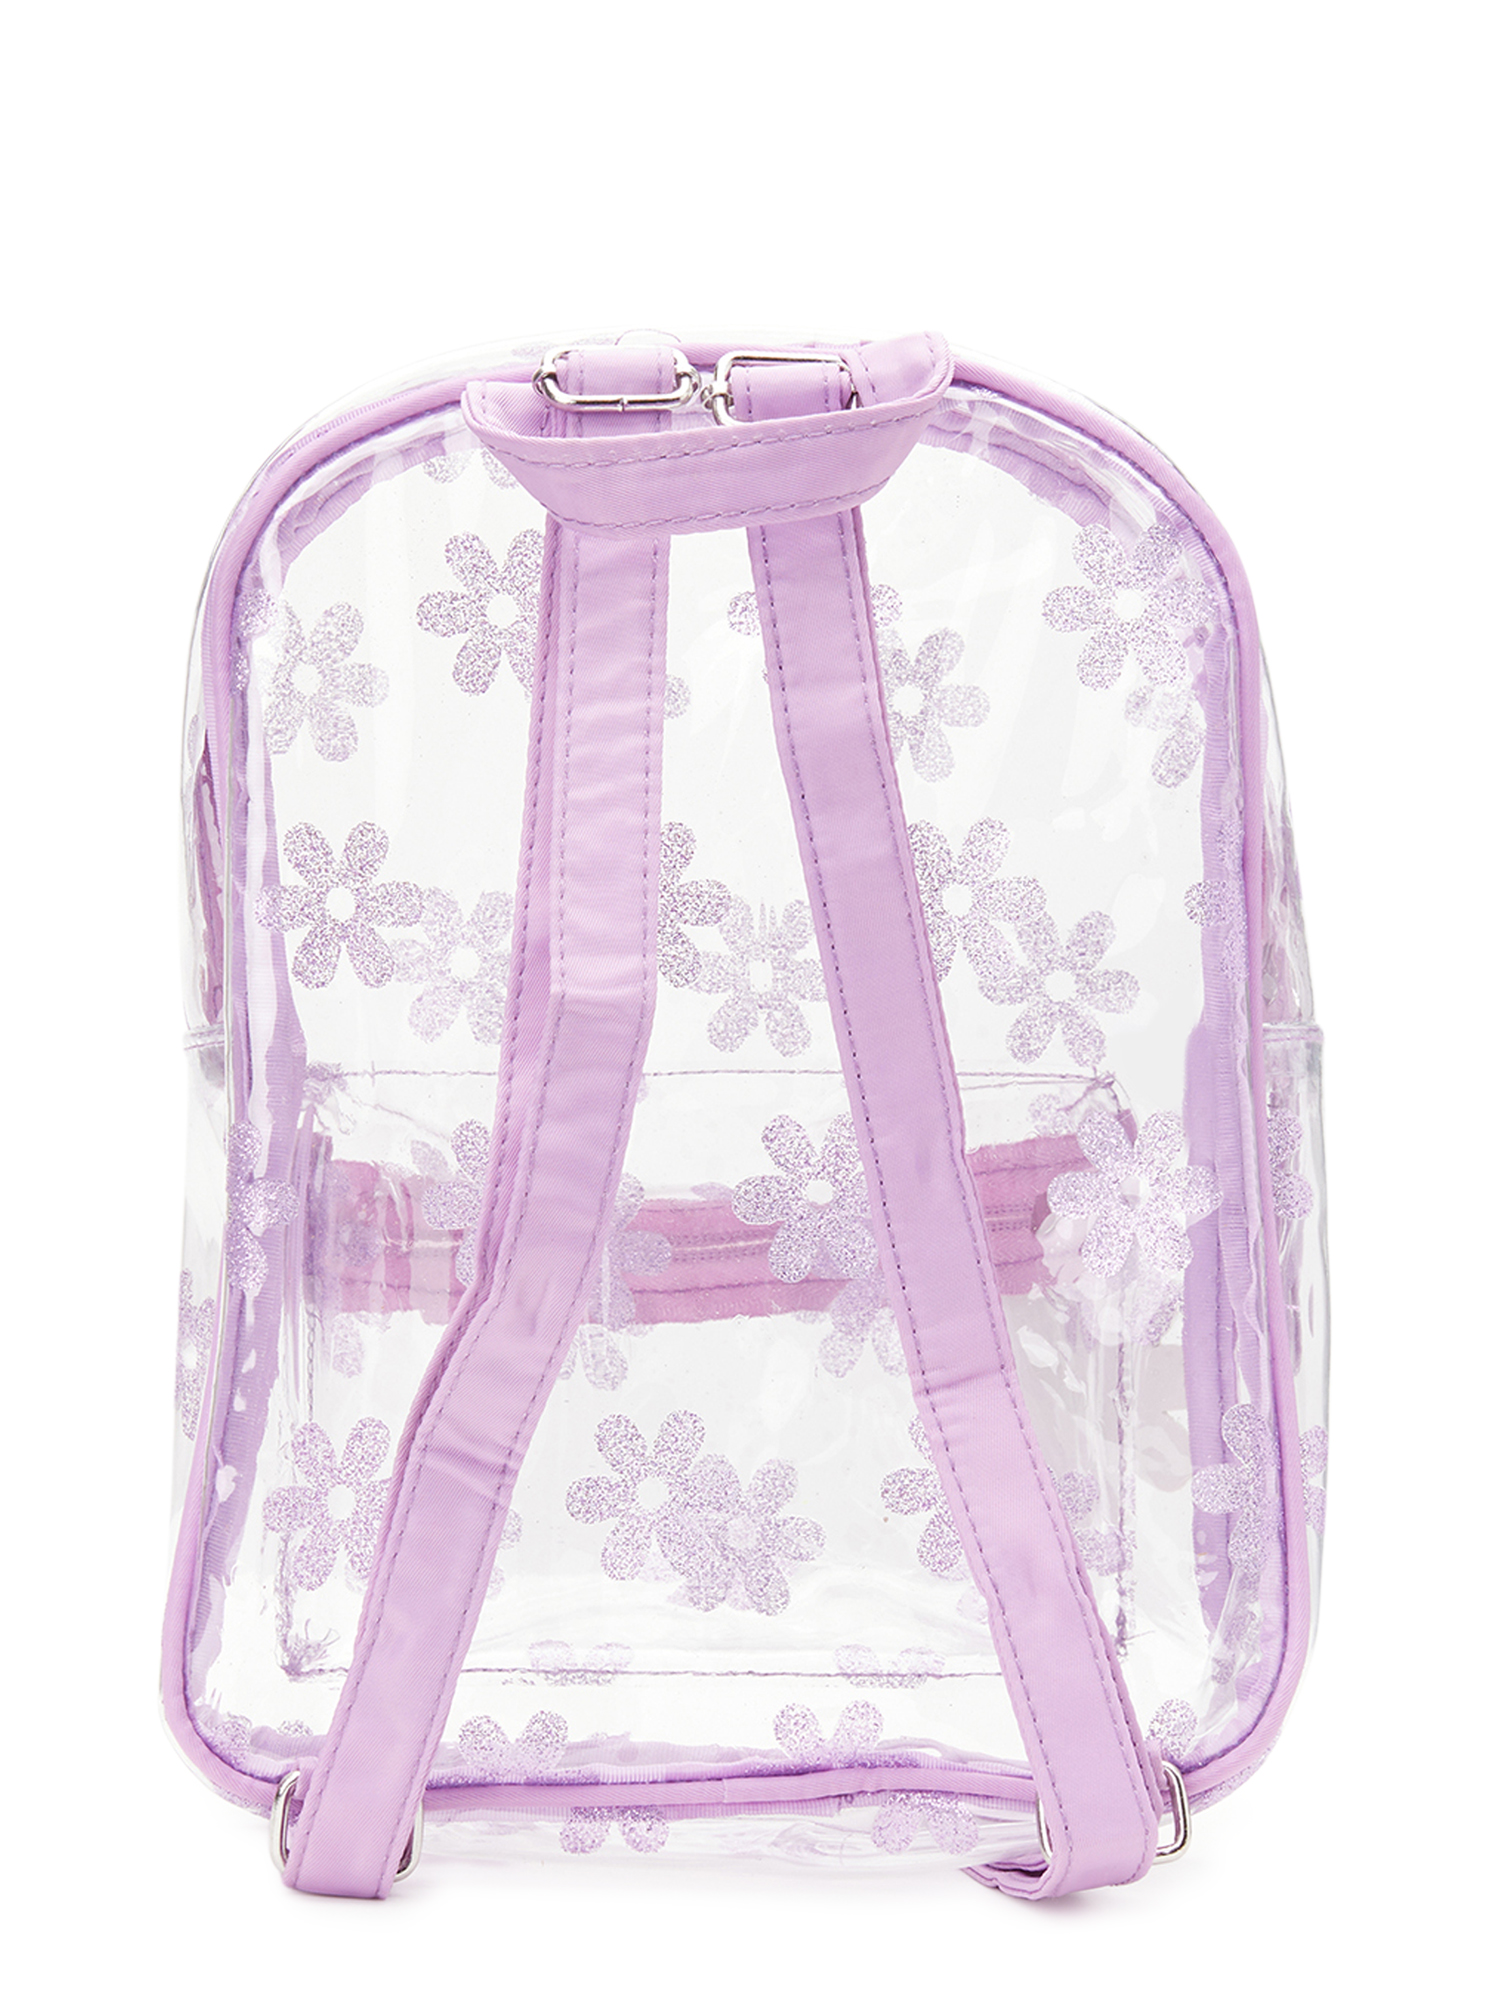 Wonder Nation Children's Daisy Glitter Print Clear Mini Dome Backpack, Purple - image 2 of 5